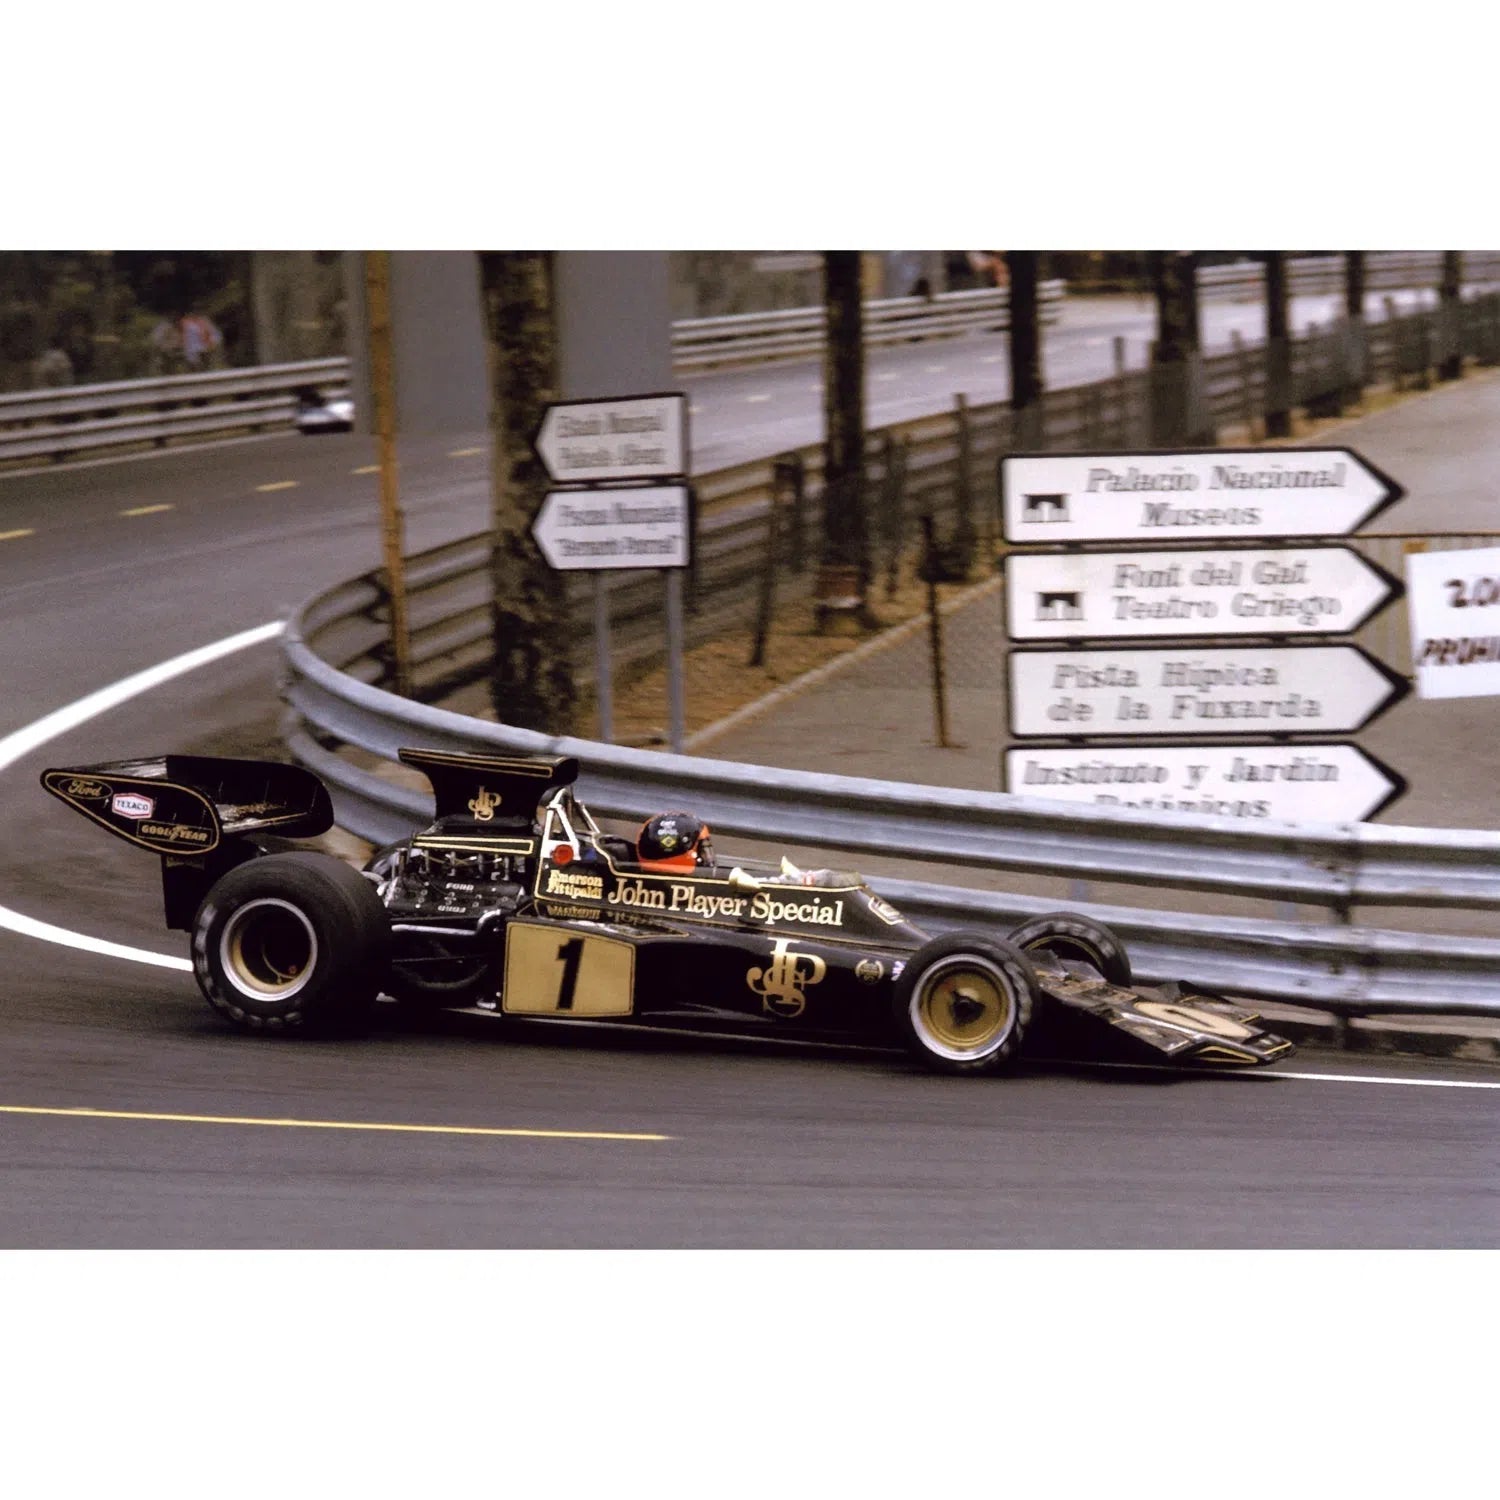 Emerson Fittipaldi en course automobile-Imagesdartistes